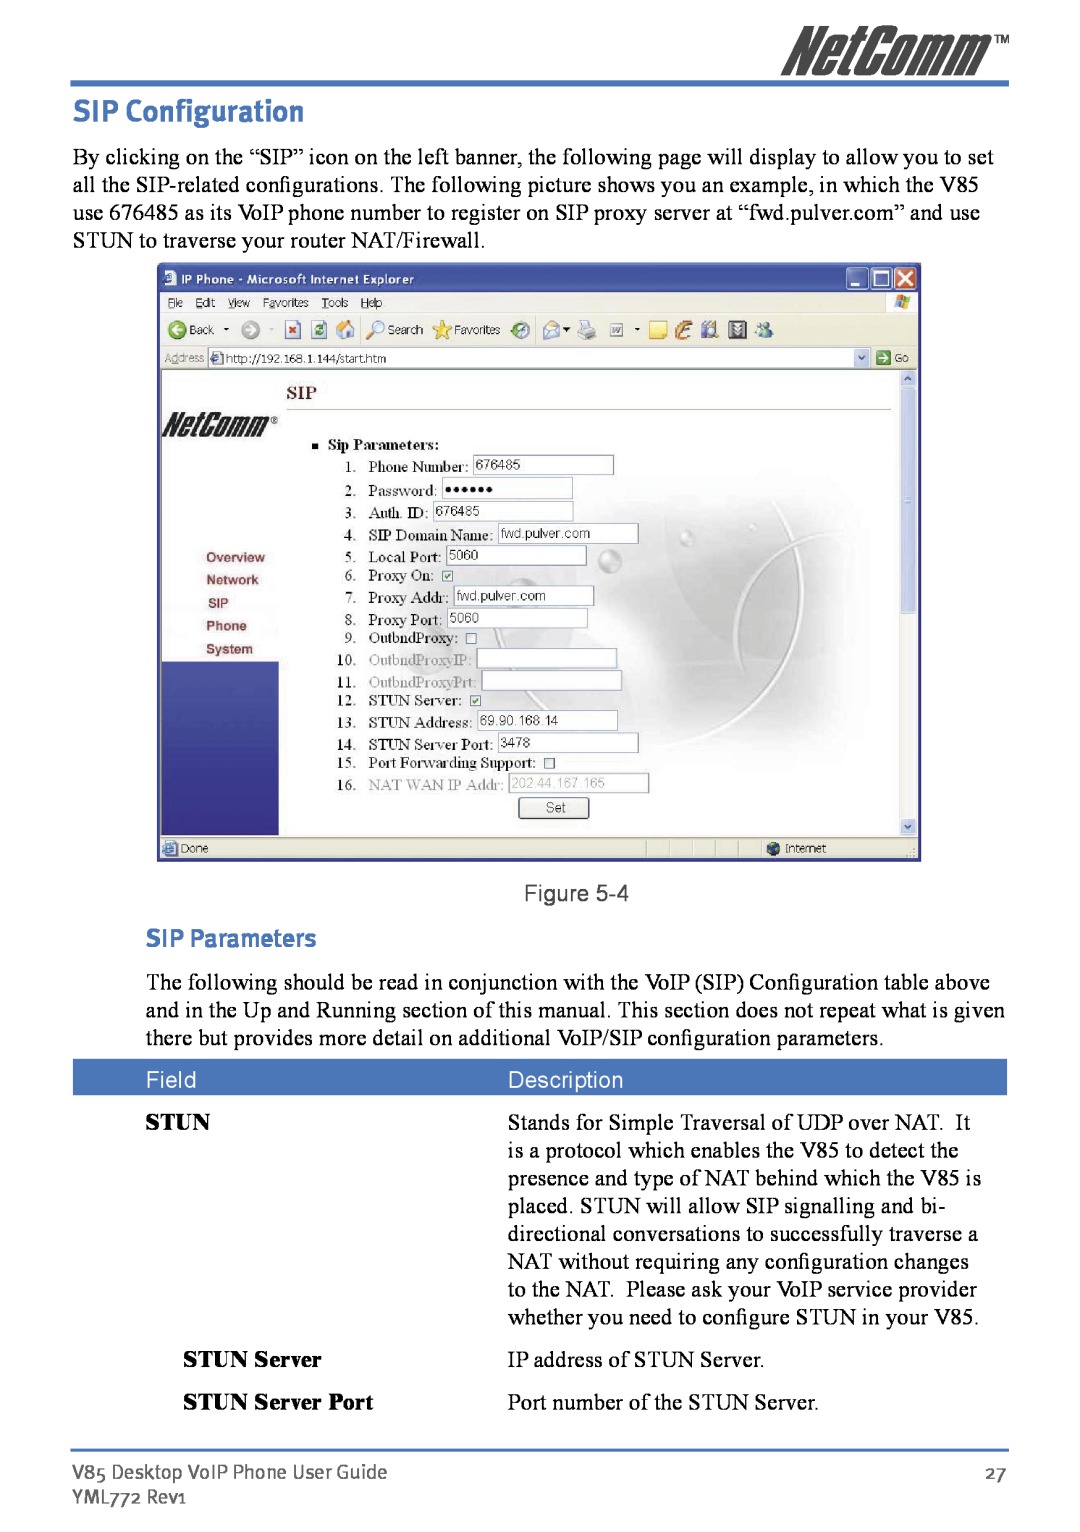 NetComm V85 manual SIP Configuration, SIP Parameters, Field, Description, Stun, STUN Server Port 